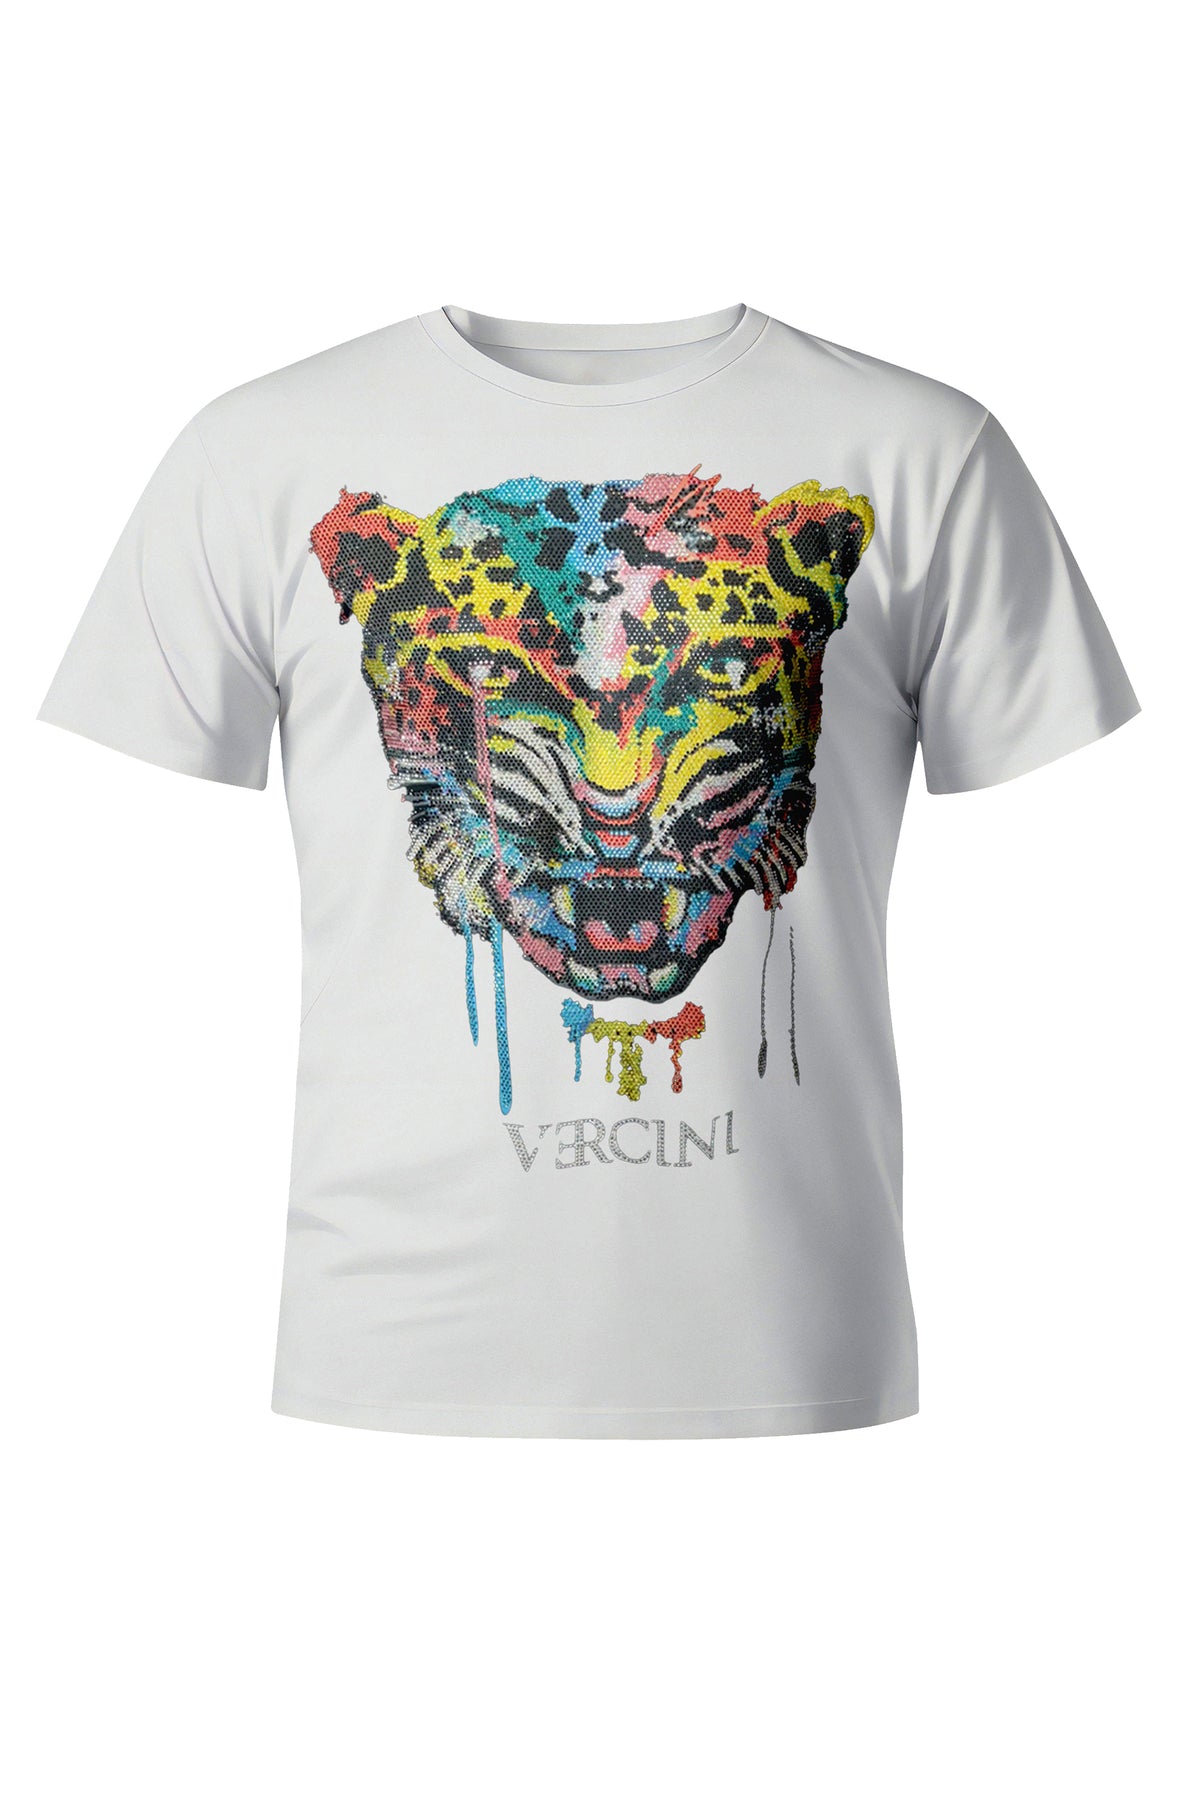 Urban Jungle Roar Graffiti Tiger T-Shirt VERCINI T-SHIRTS Shirt Collection Vercini